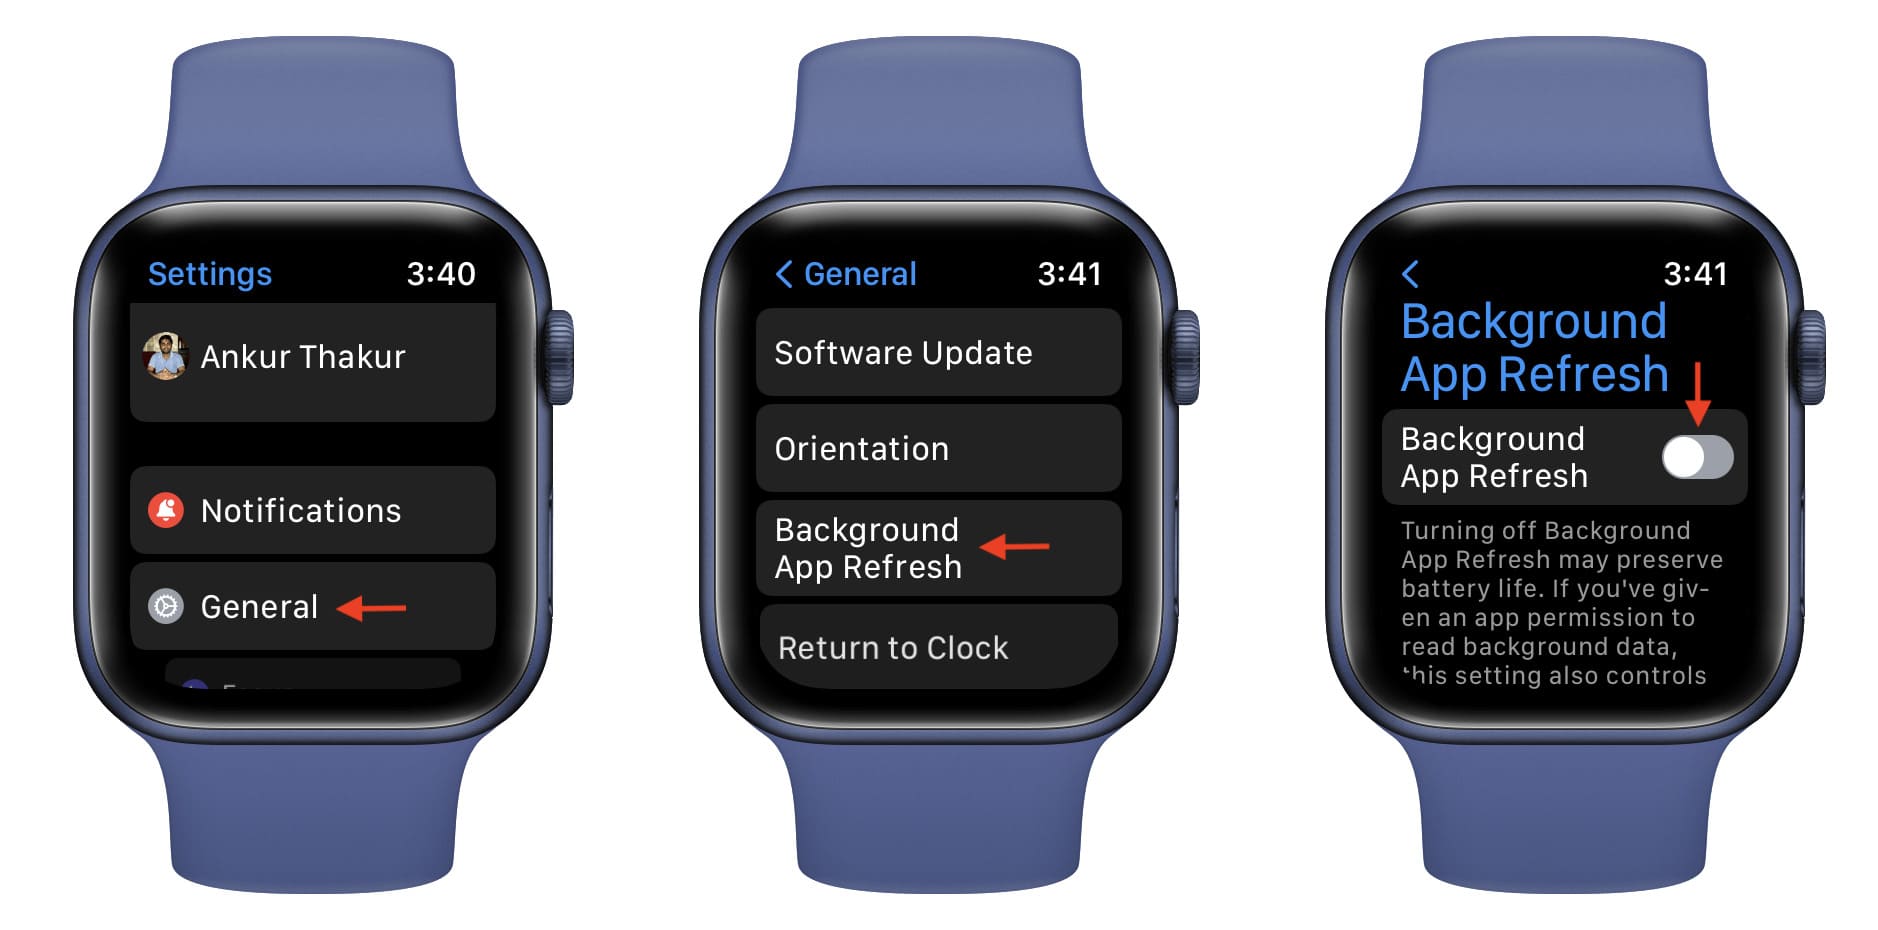 Turn off Background App Refresh on Apple Watch